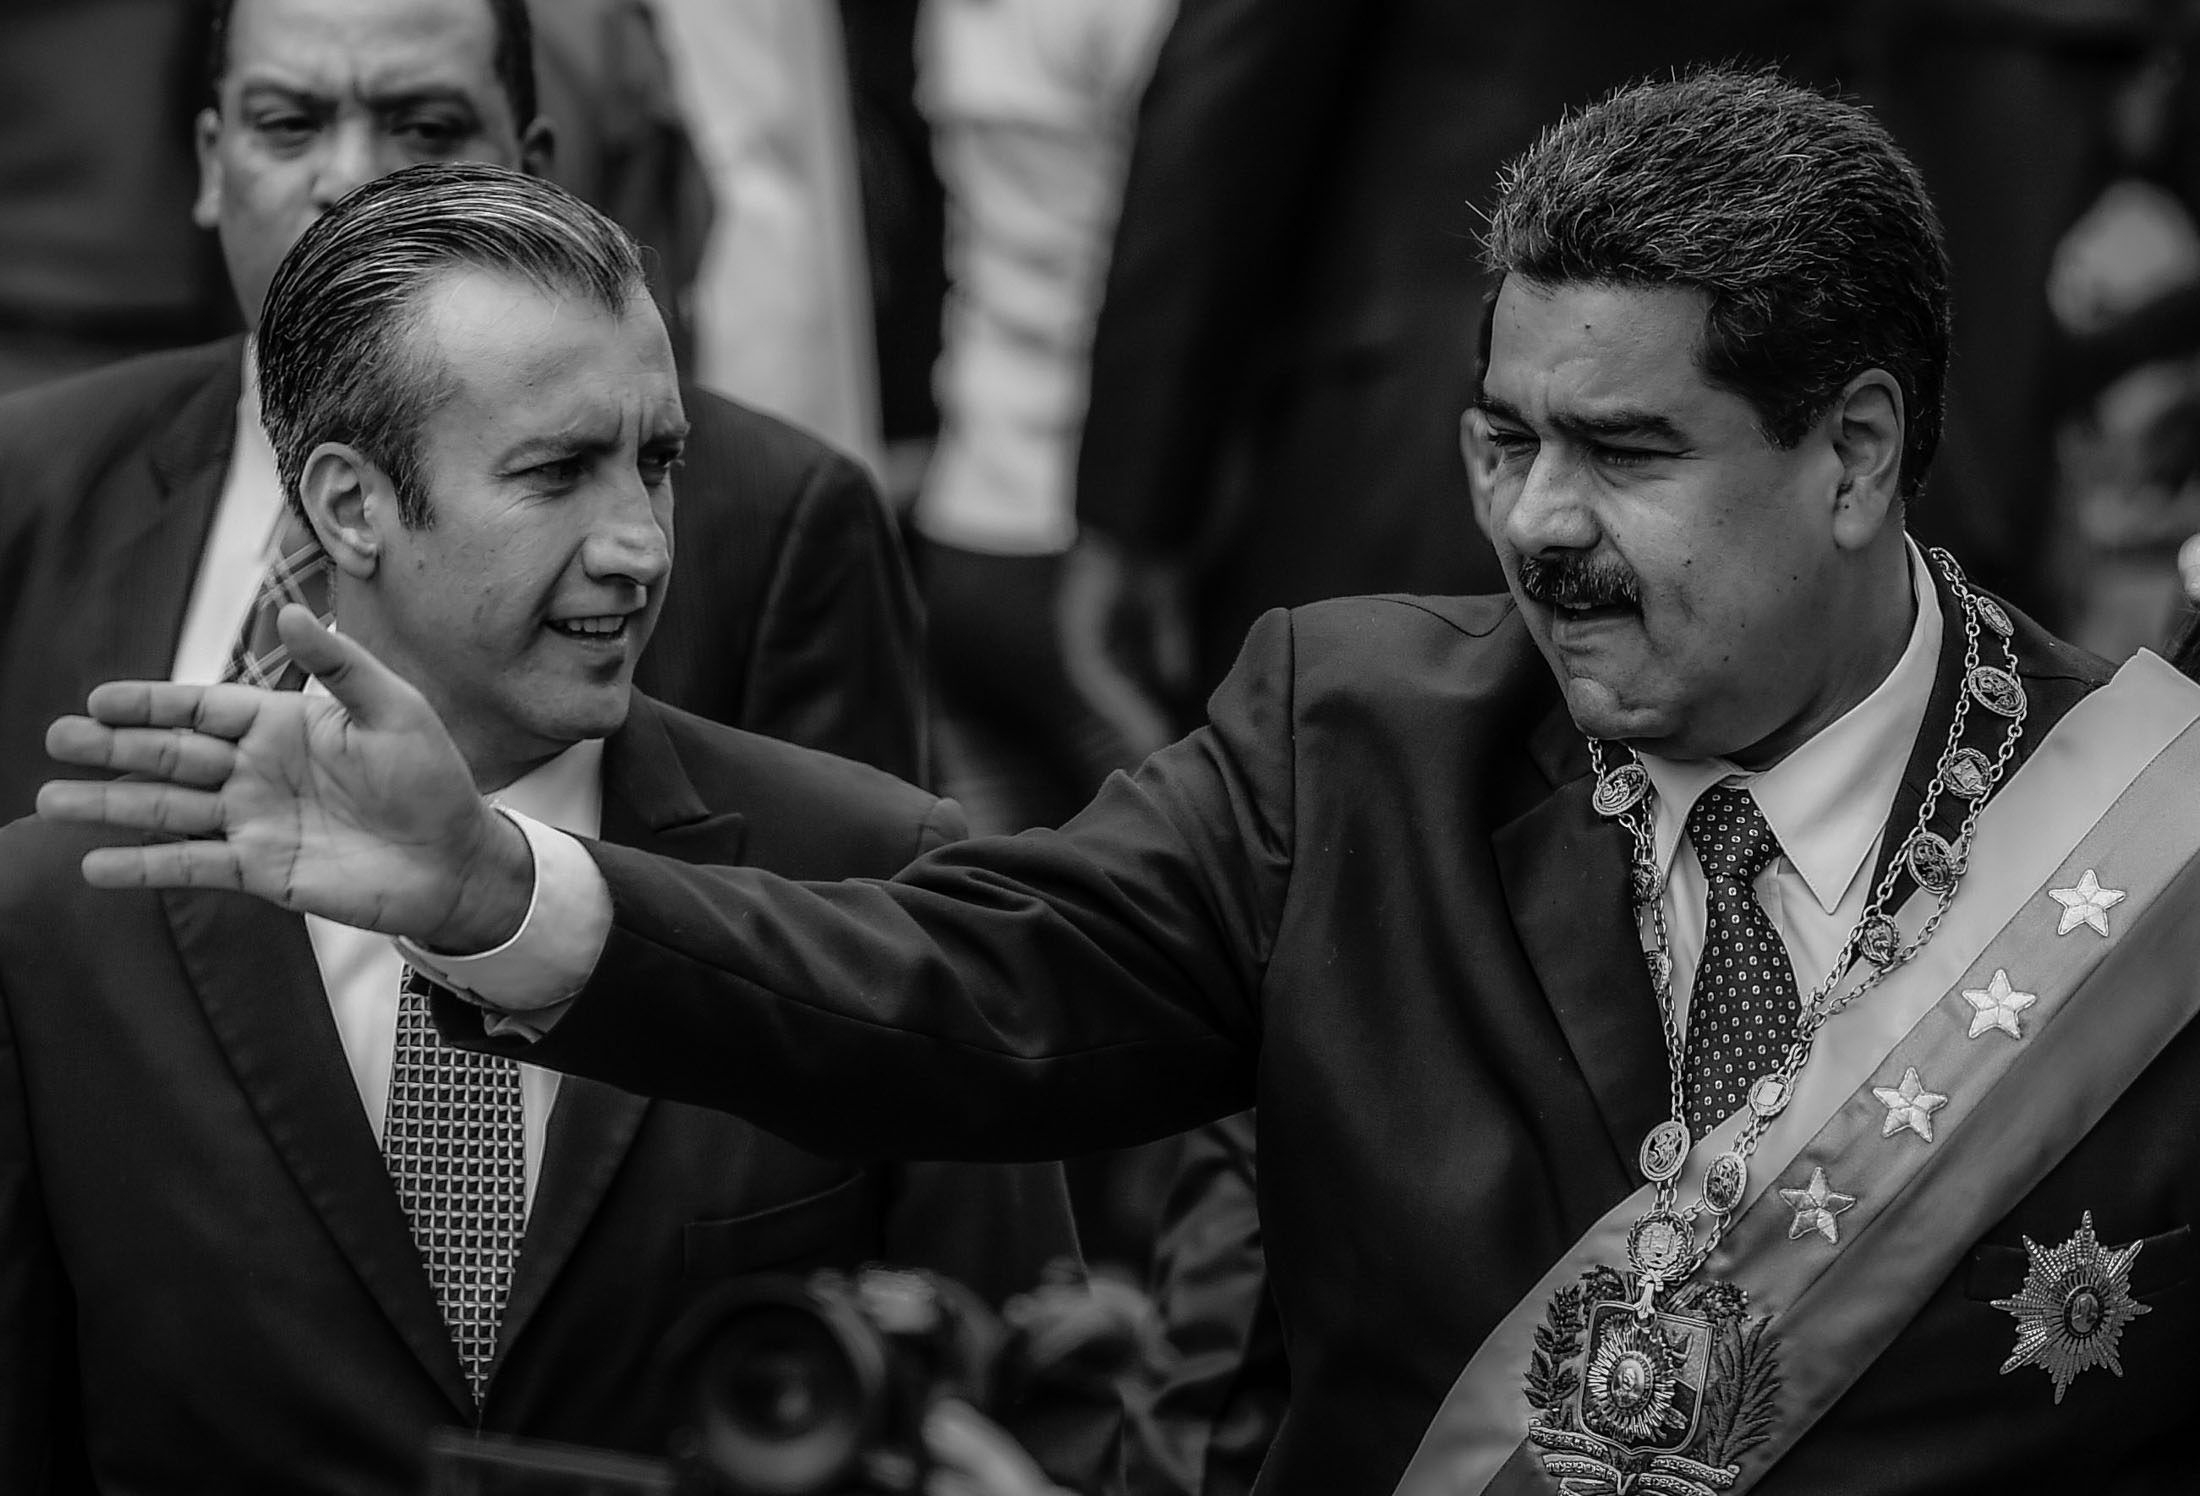 Critics Skewer Venezuelan President Over Feast as Country Starves